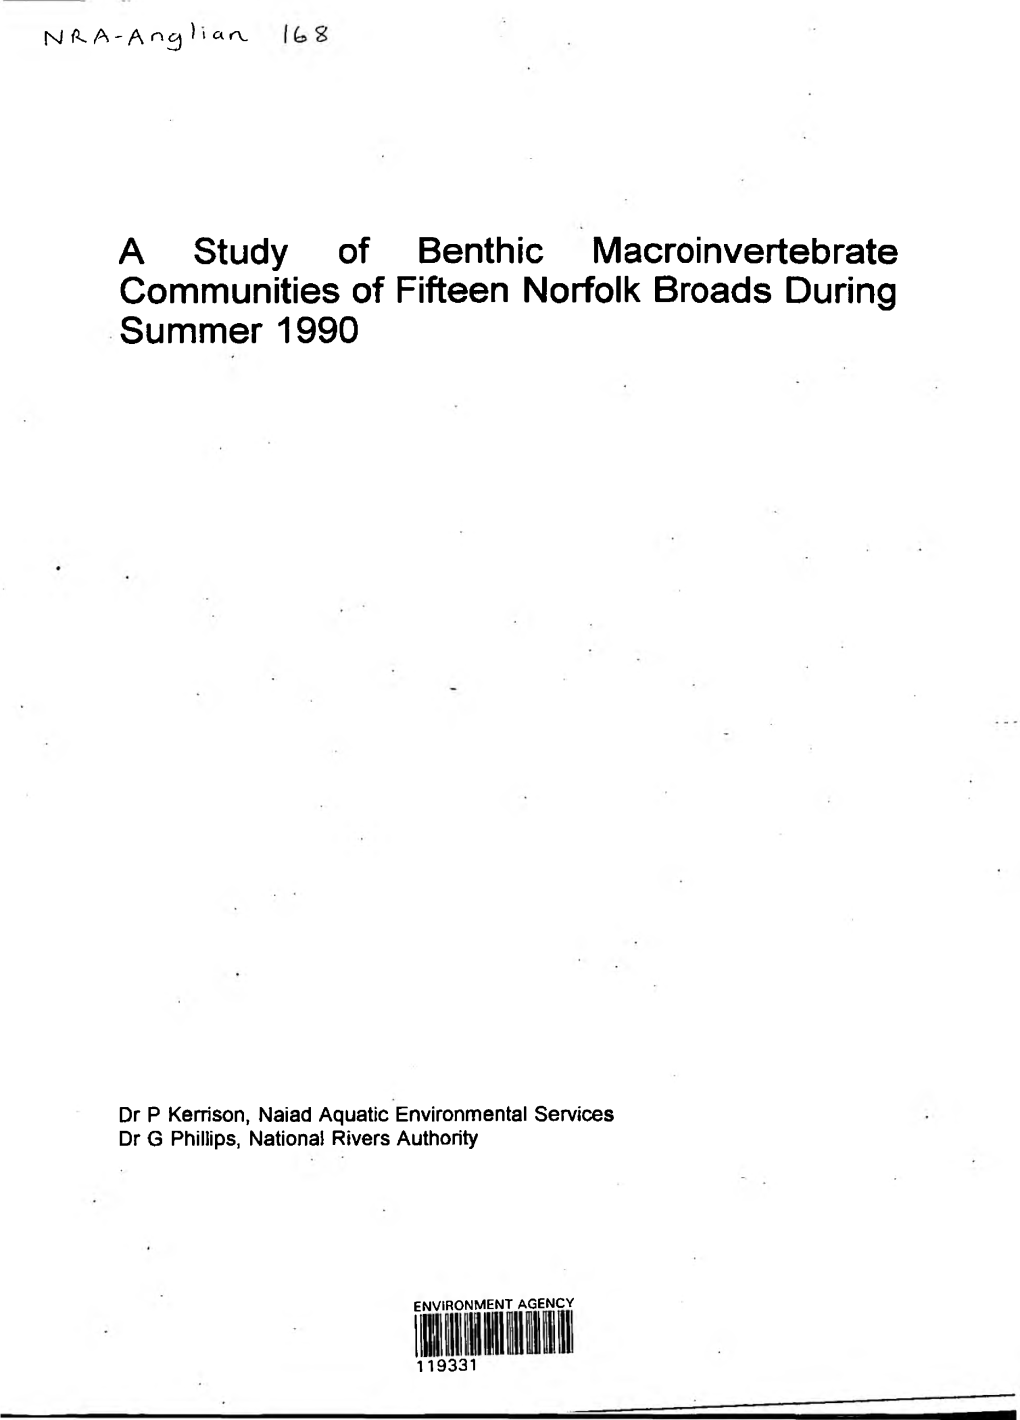 A Study of Benthic Macroinvertebrate Communities of Fifteen Norfolk Broads During Summer 1990